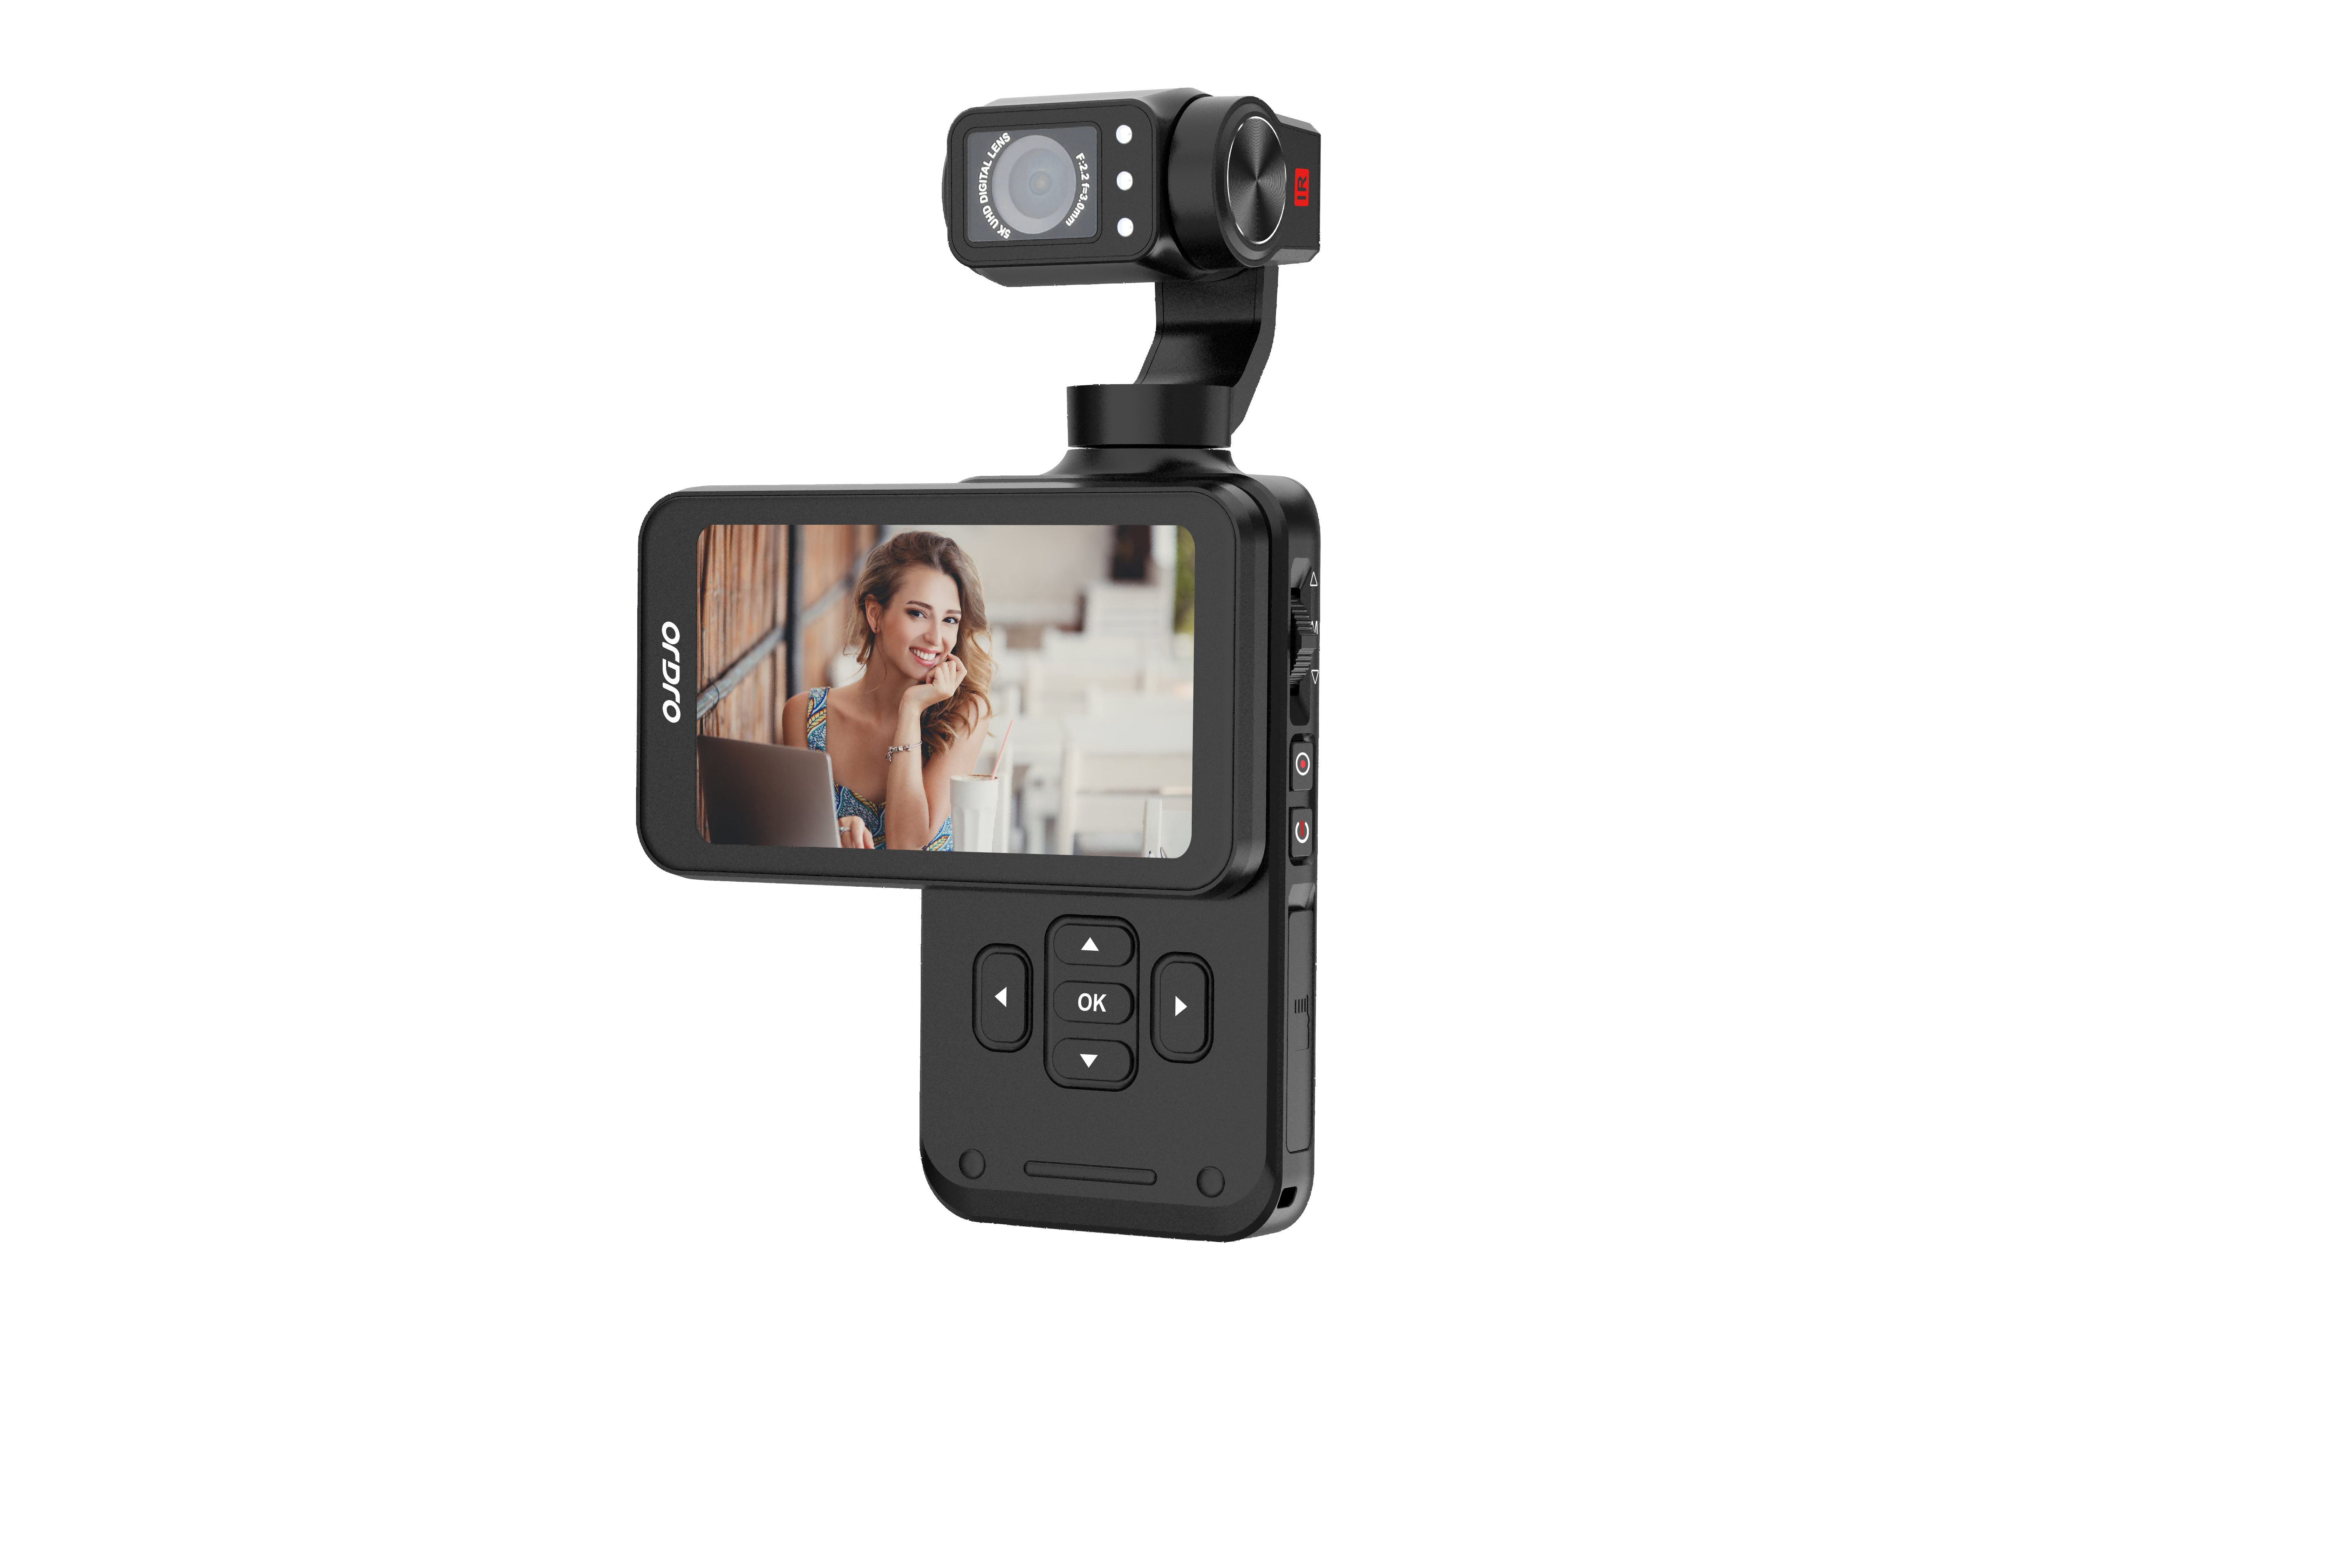 ORDRO M5 pocket camera handheld gimbal anti-shake vlog shooting travel Boston portable compact camera